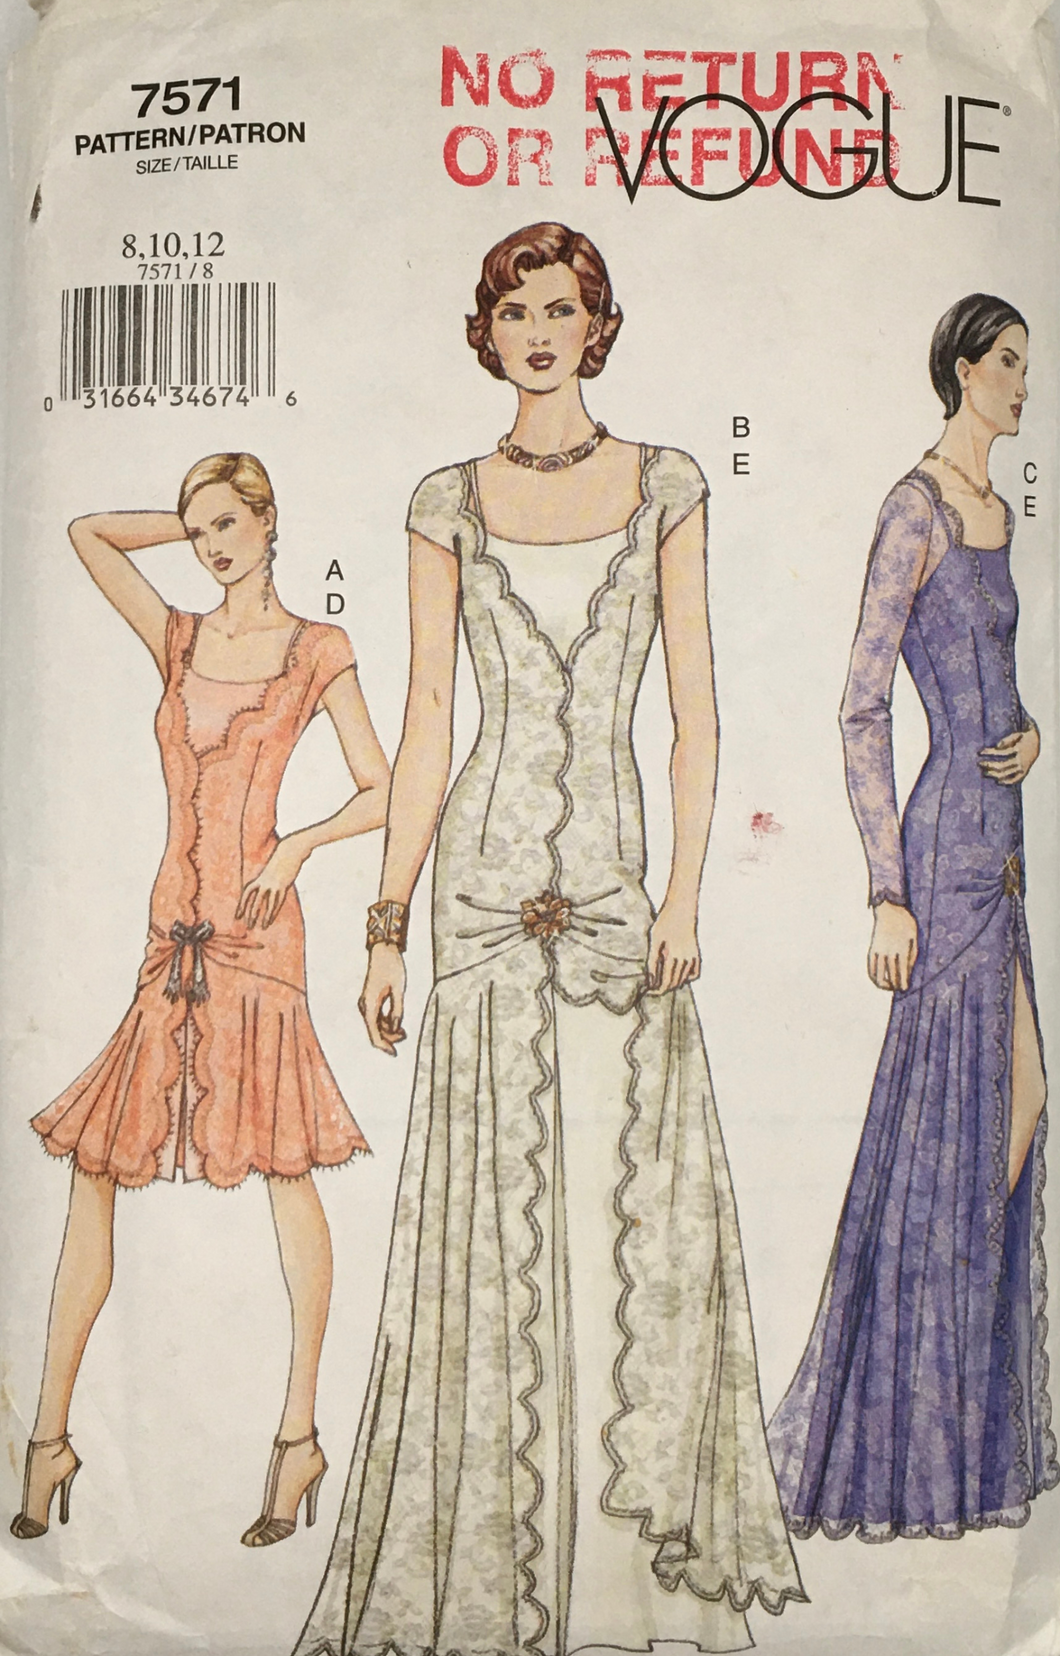 2002 Sewing Pattern: Vogue 7571